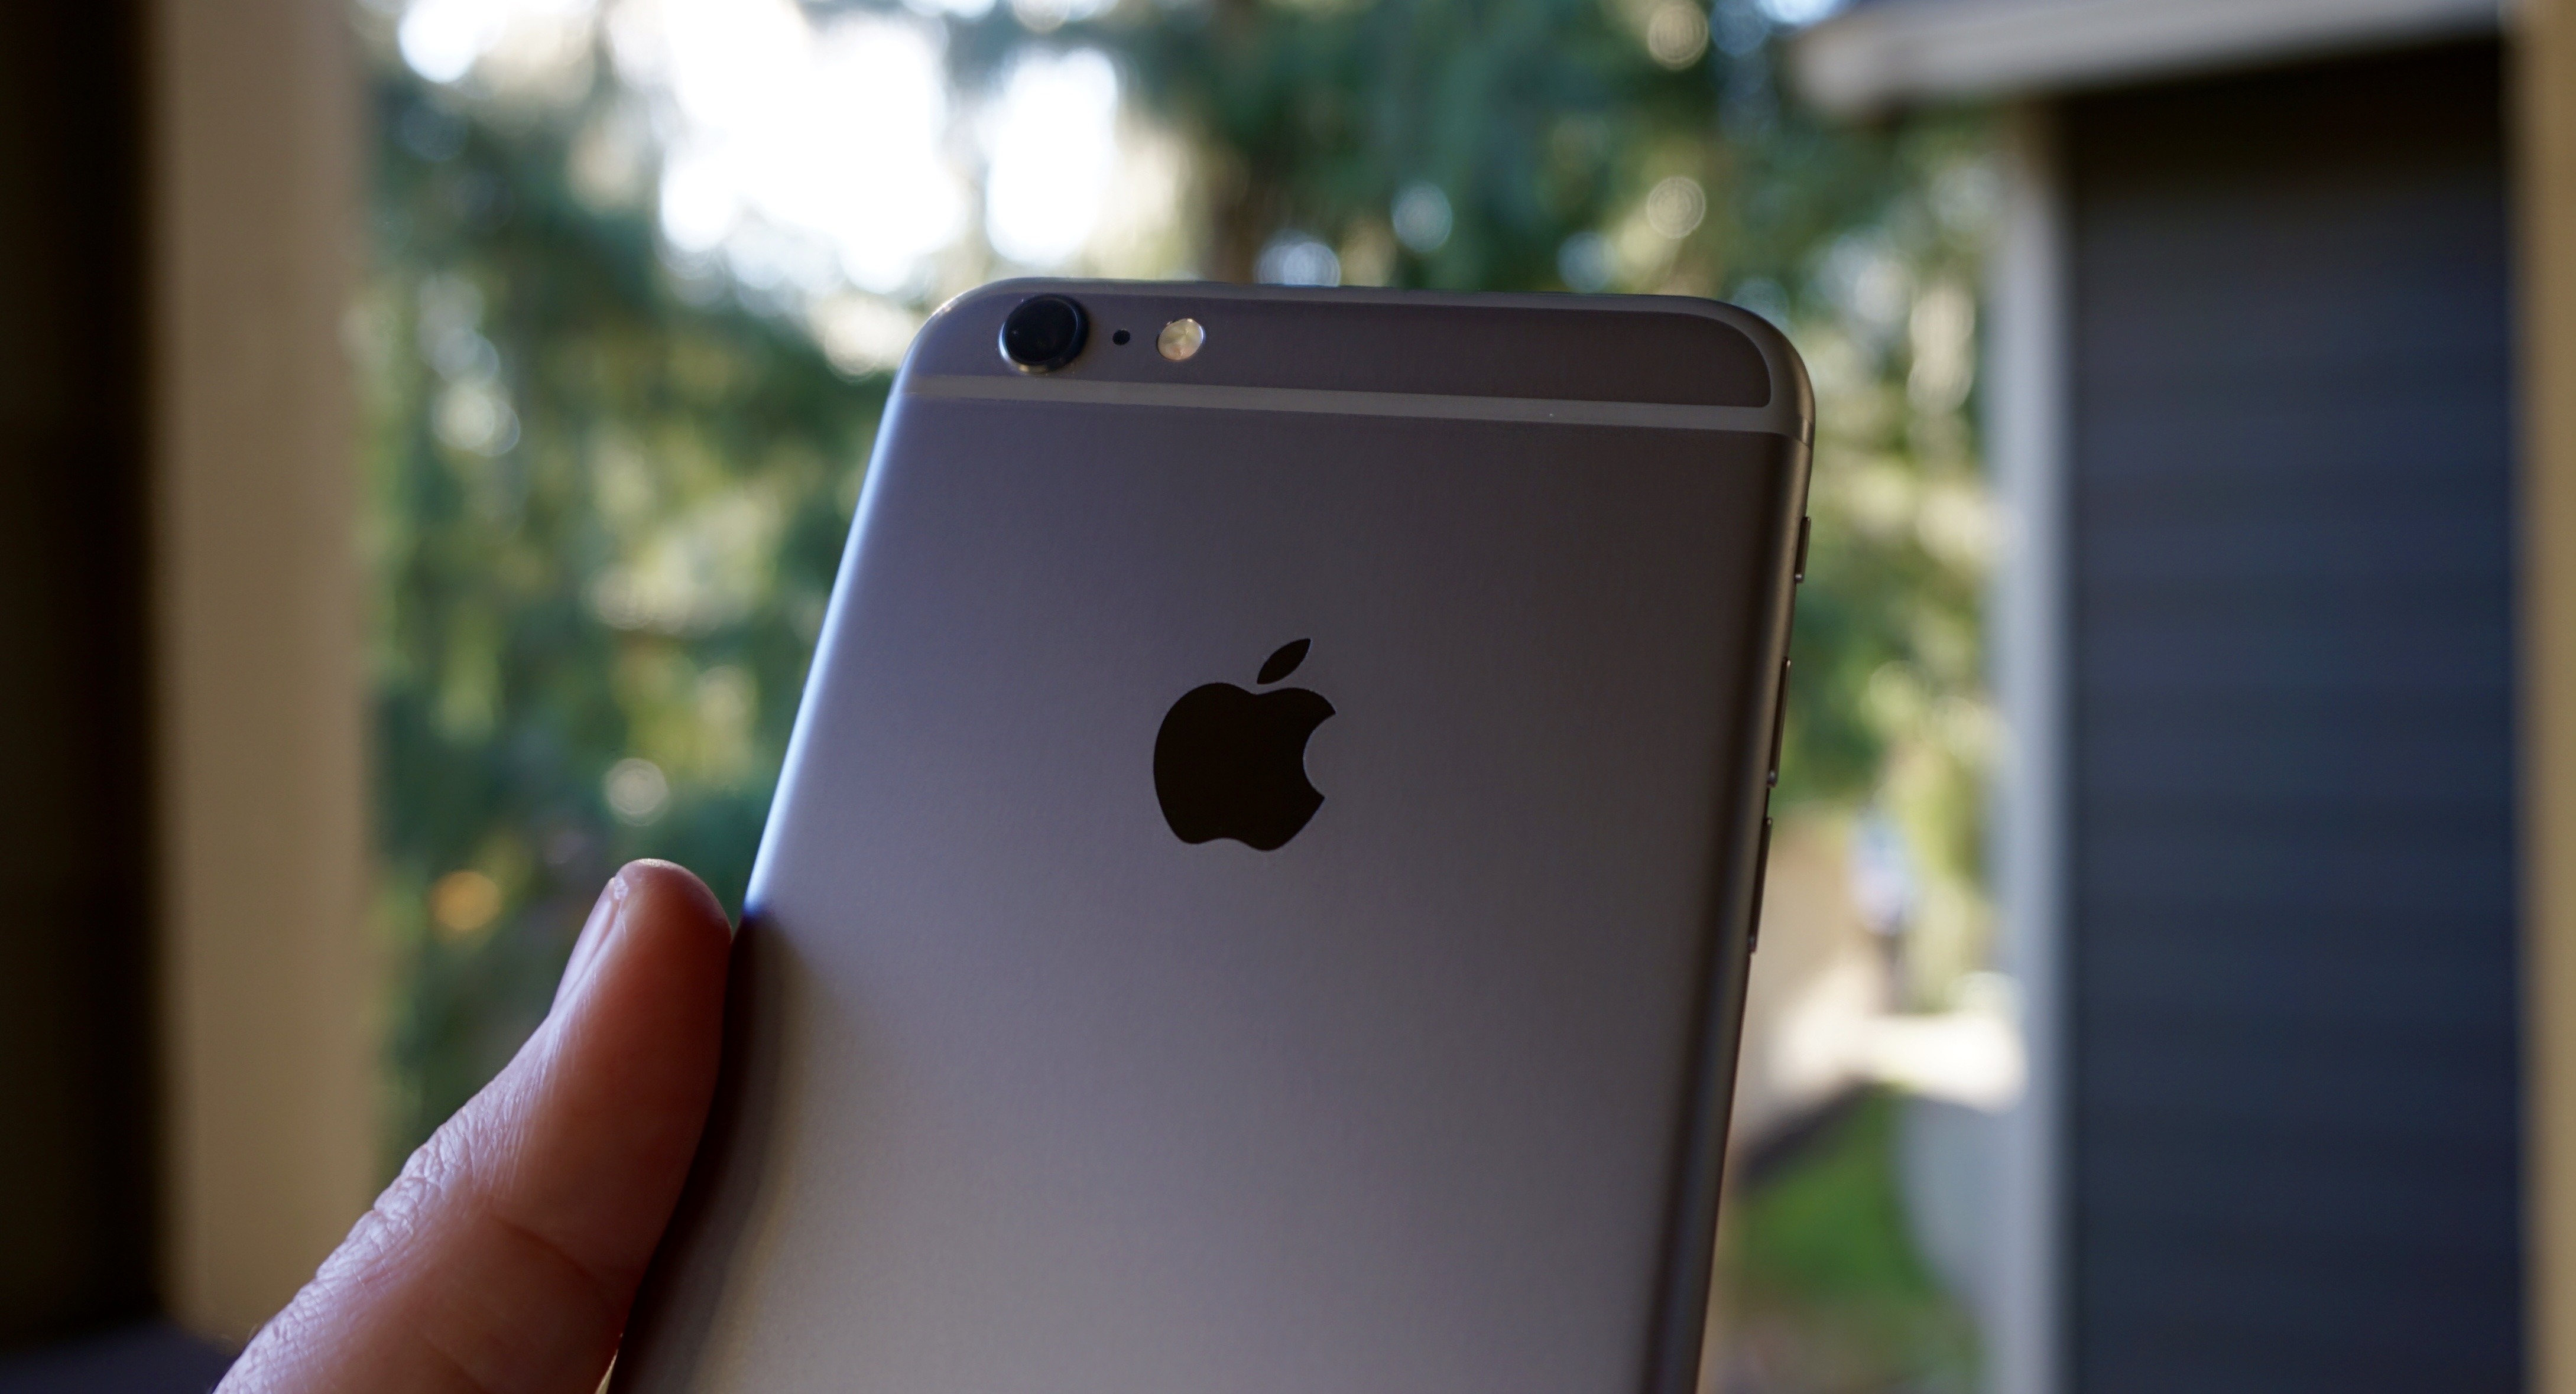 Apple iPhone 7 Plus vs iPhone 6s Plus: Should you upgrade?